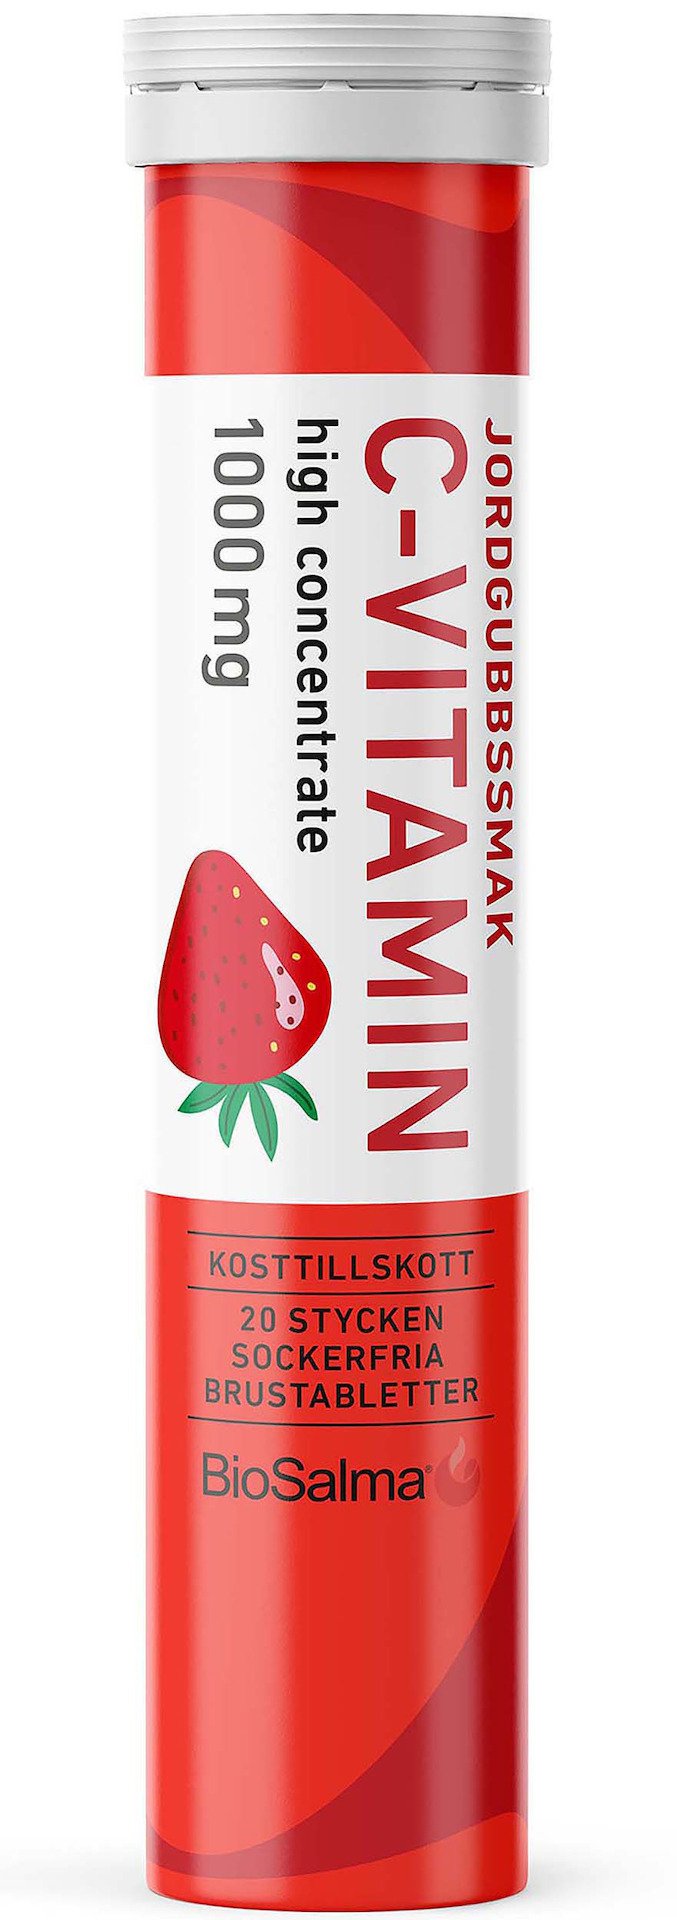 BioSalma C-vitamin 1000 mg Jordgubbssmak 20 brustabletter